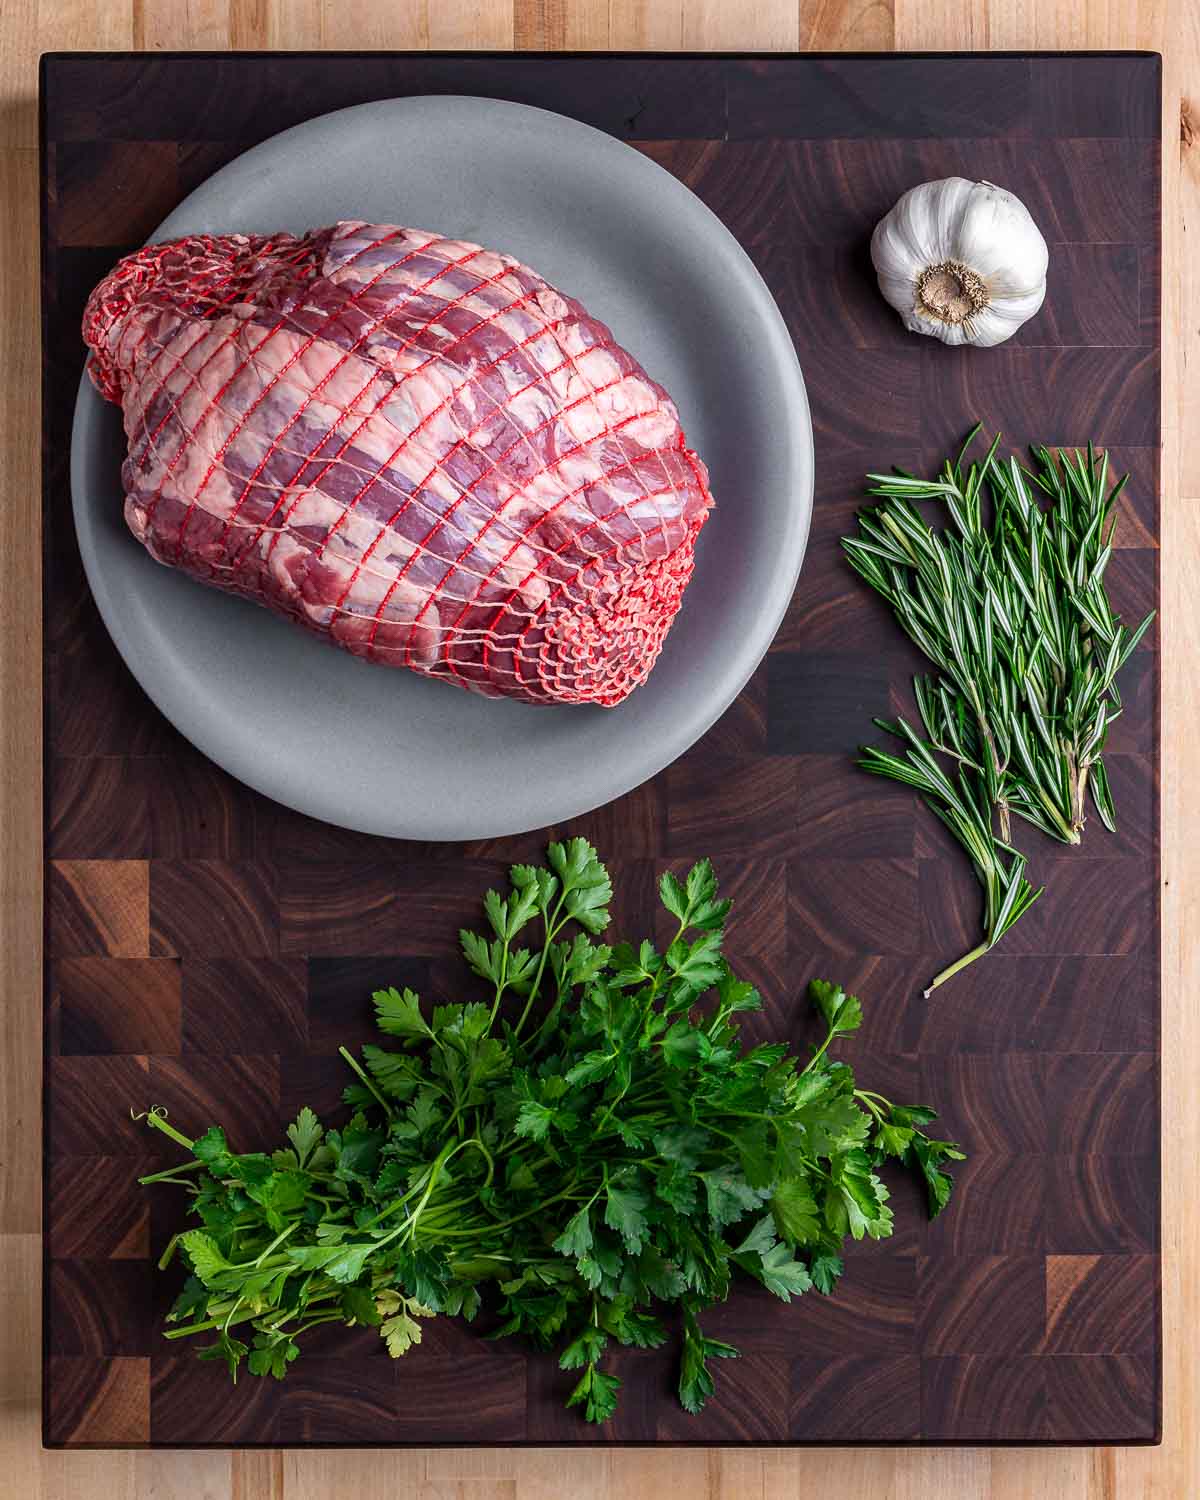 Ingredients shown: boneless leg of lamb, garlic, rosemary, and parsley.